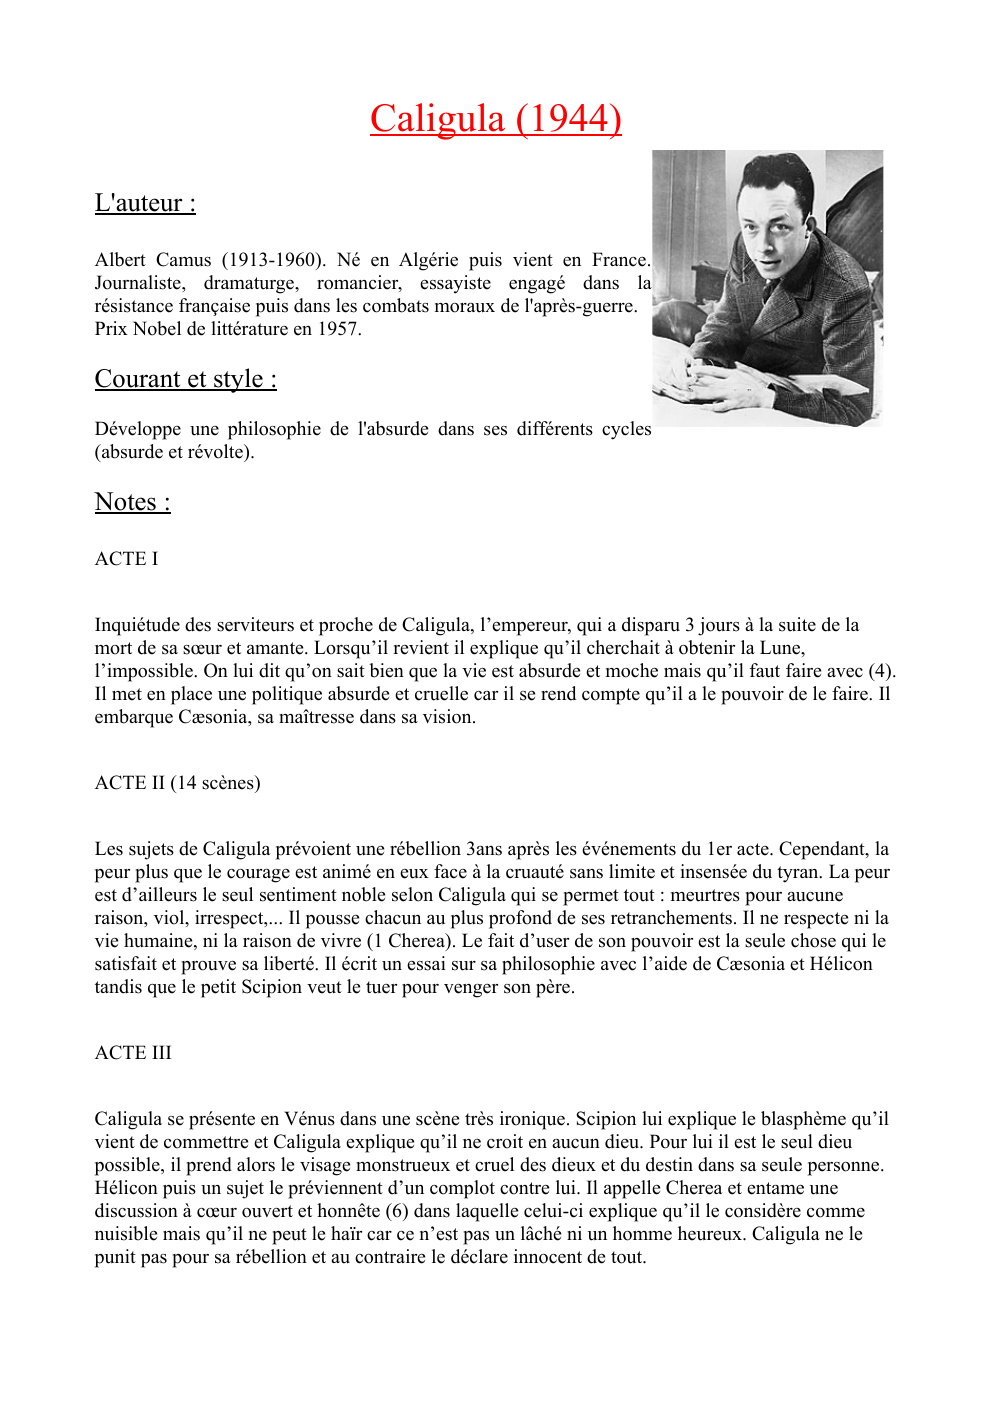 Prévisualisation du document Caligula (1944)